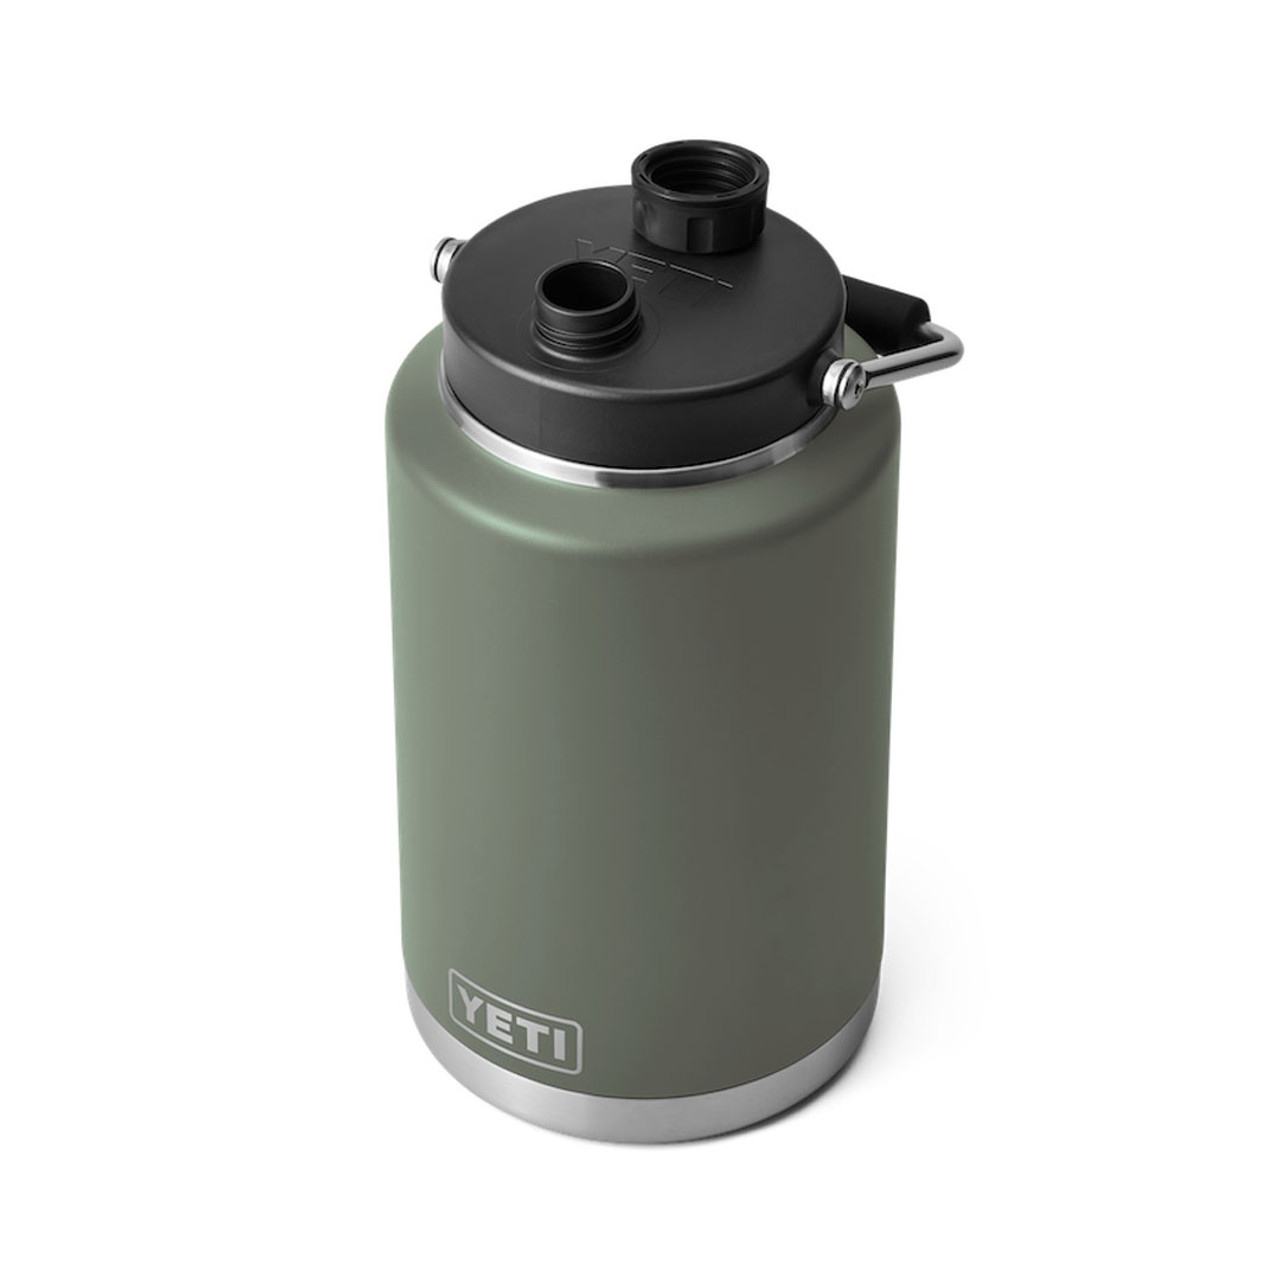 Yeti Rambler Beverage Bucket with Lid - Camp Green